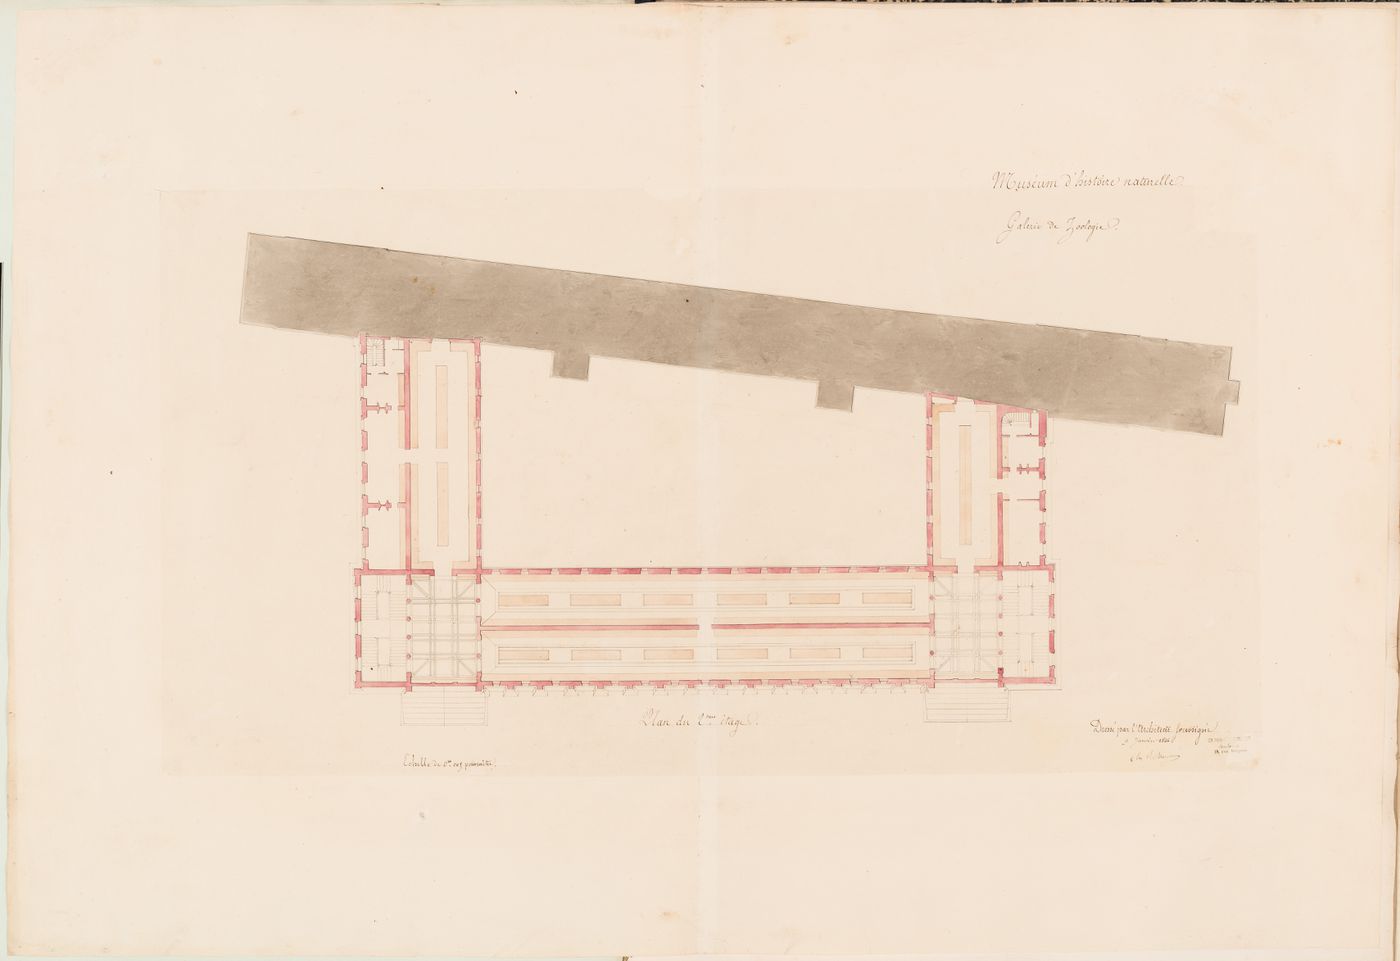 Project for a Galerie de zoologie, 1846: Second floor plan